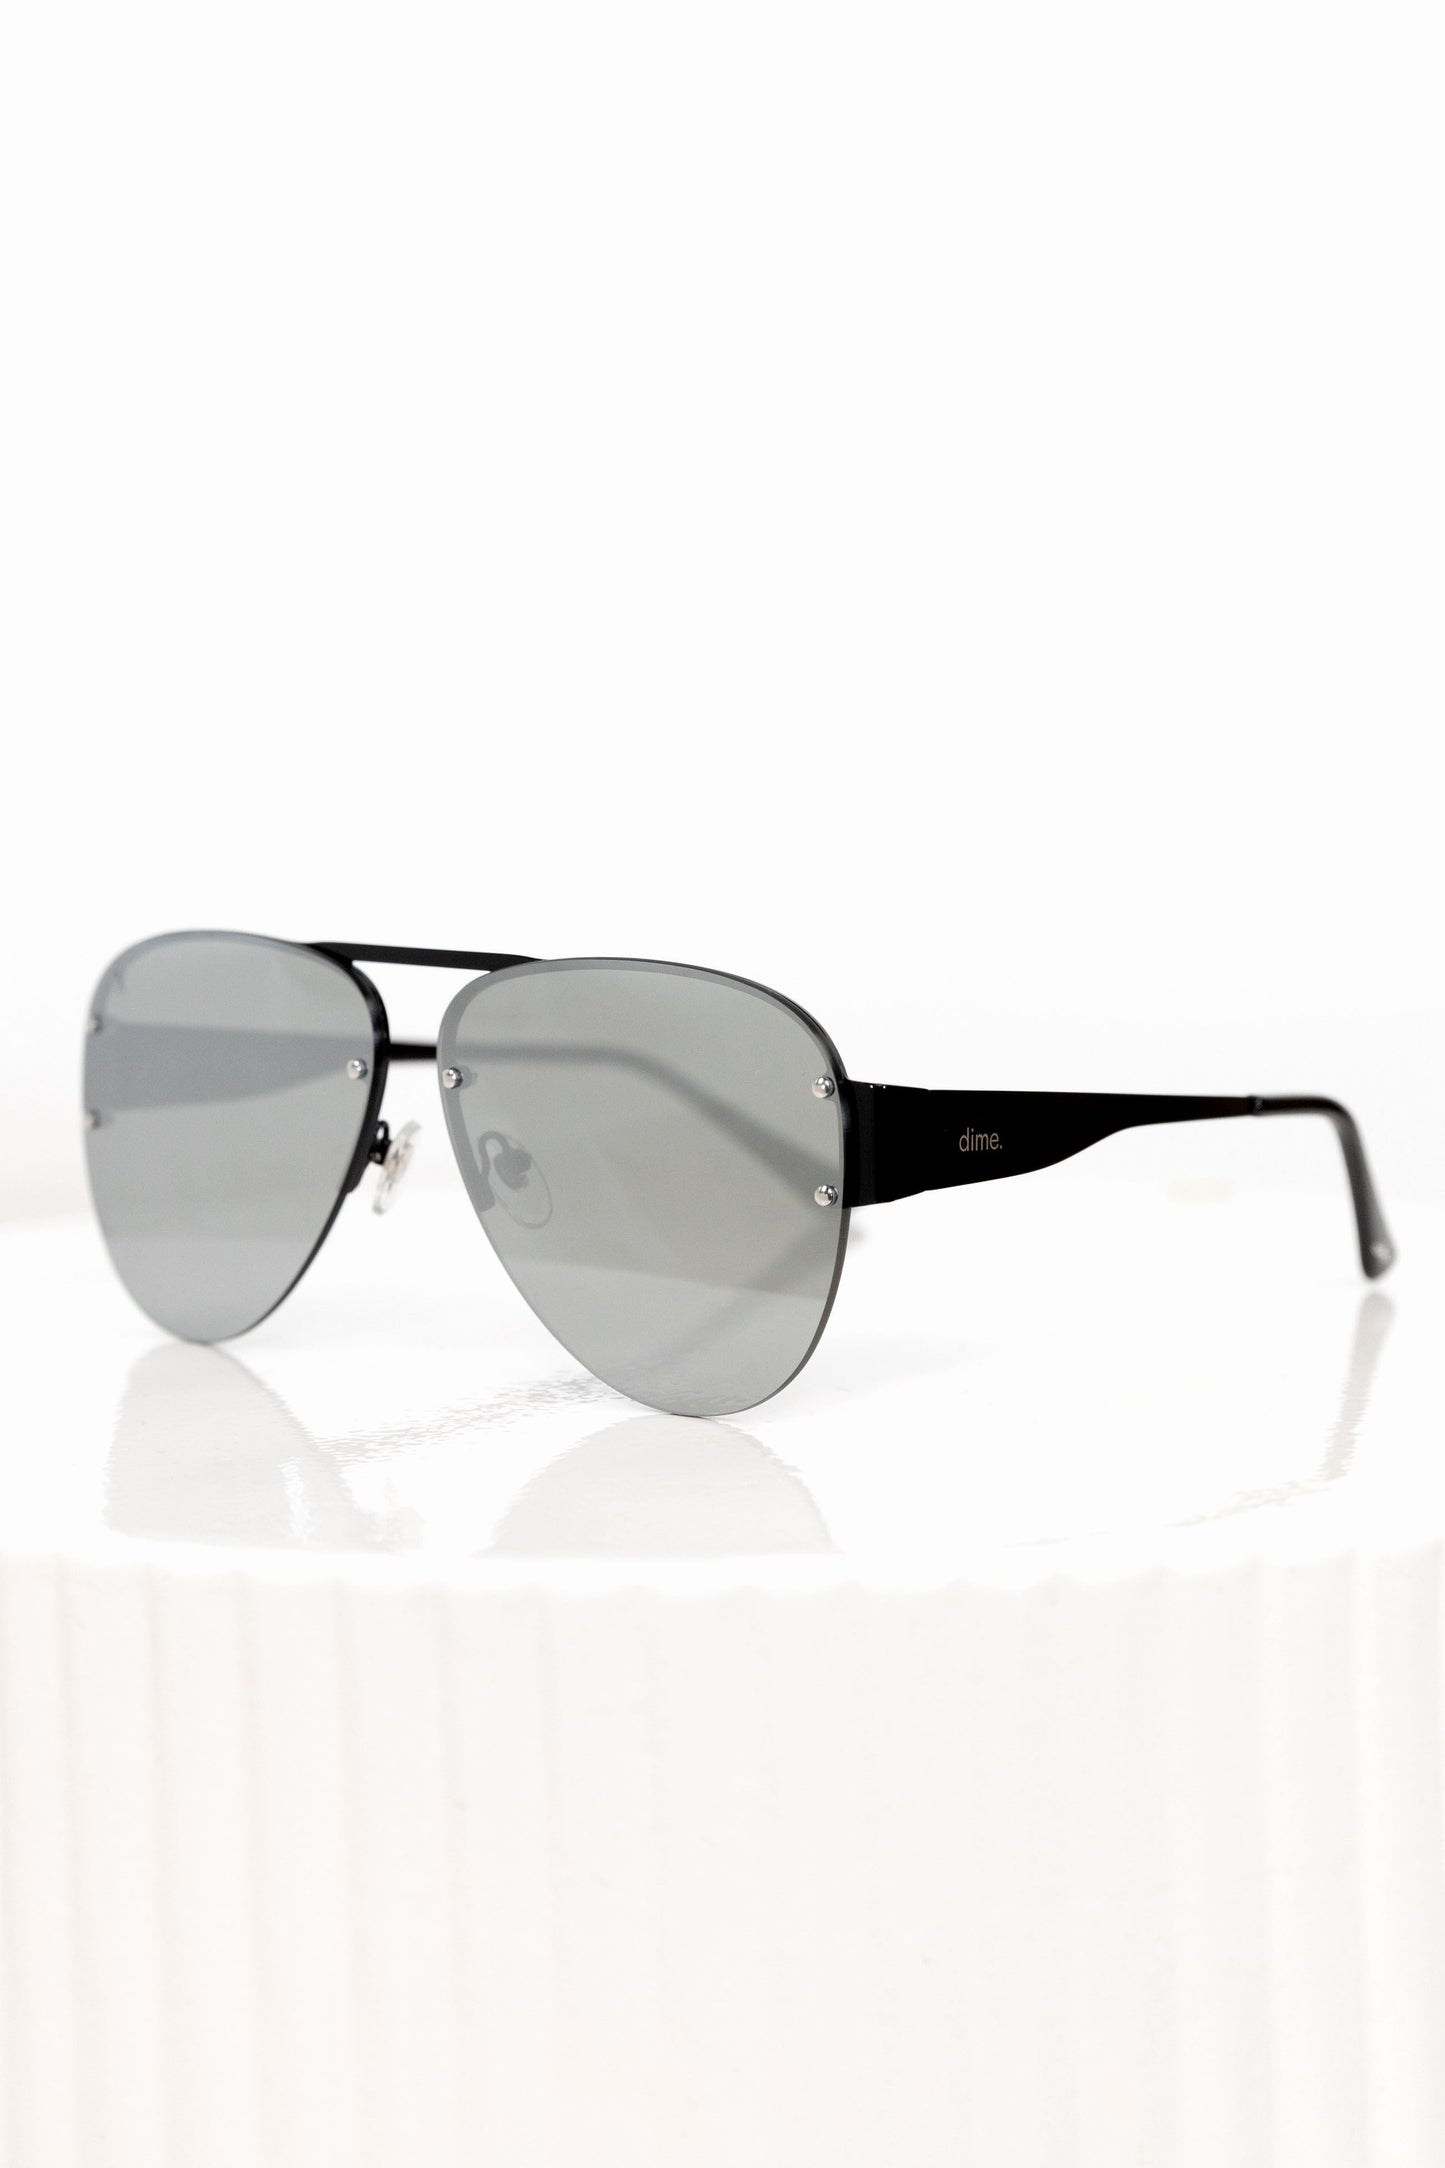 917 Sunglasses